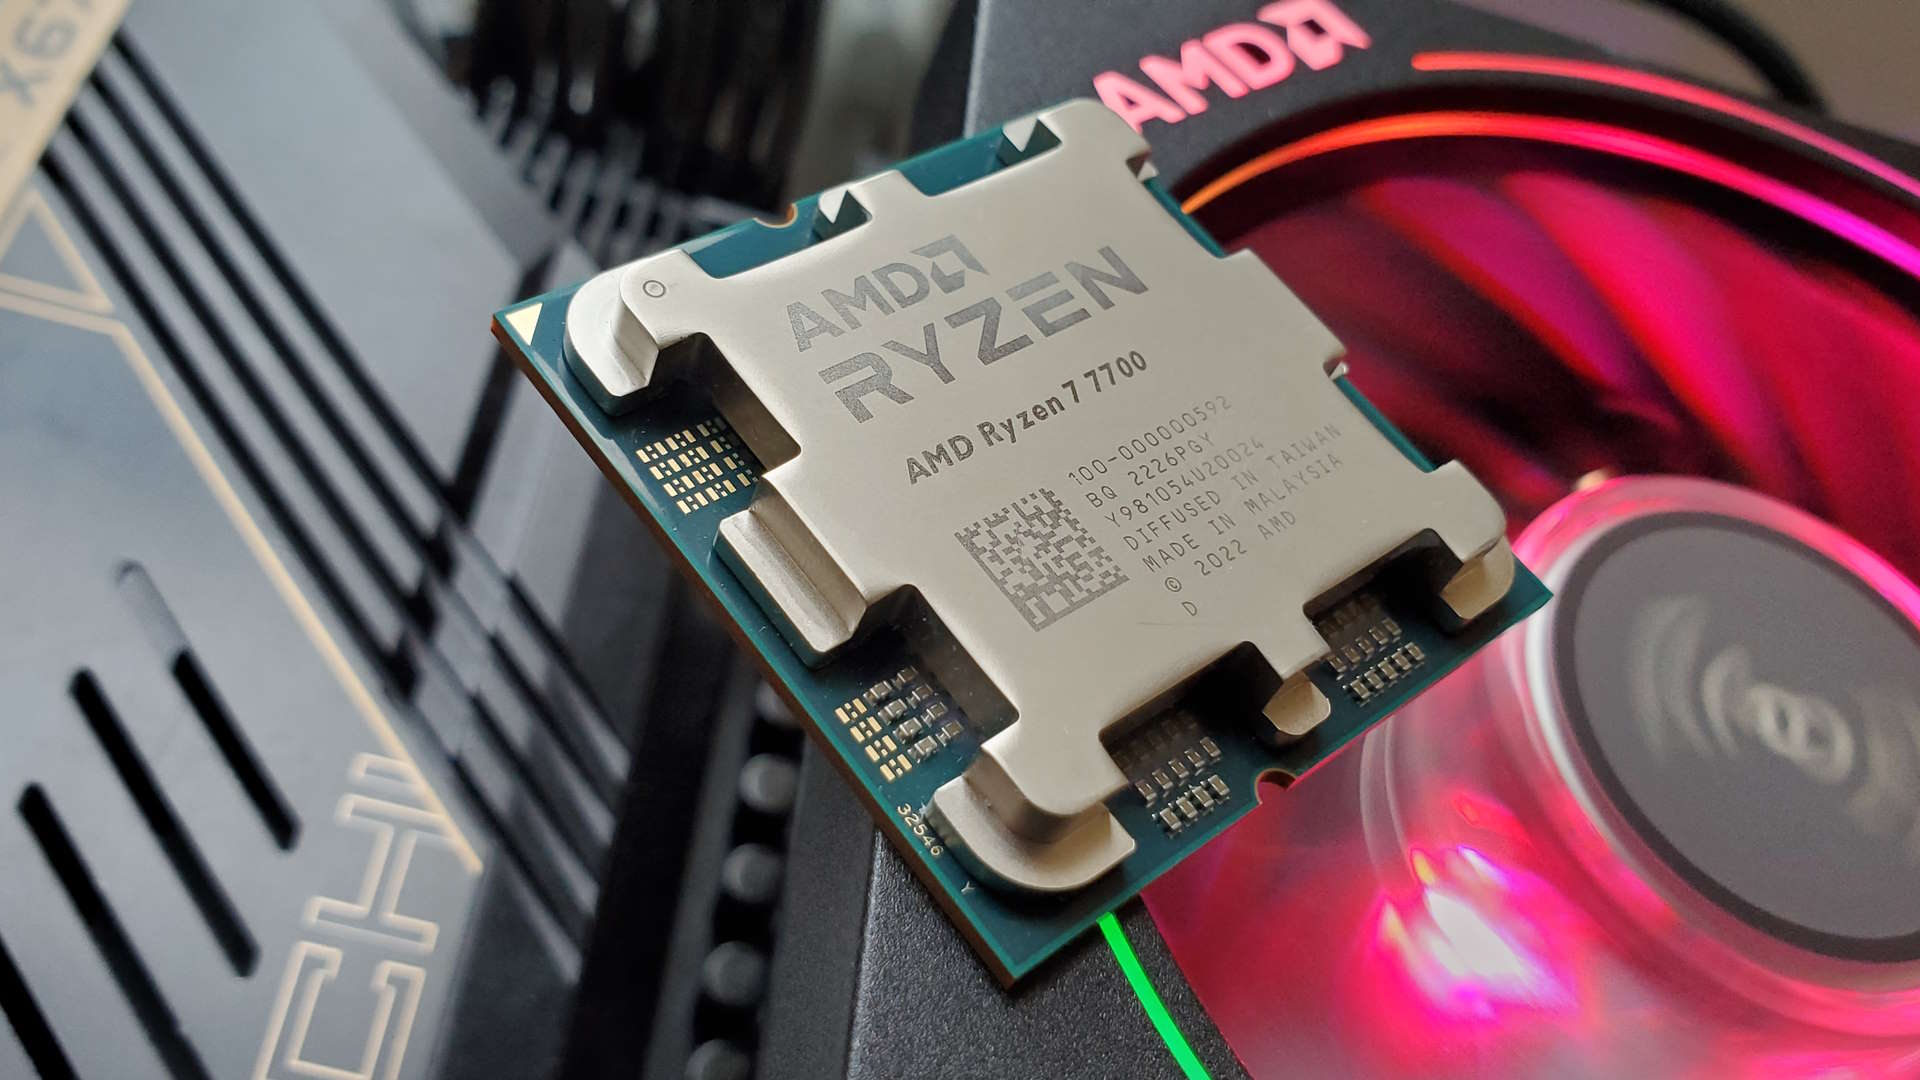 AMD RYZEN 7 7700X | Jawa